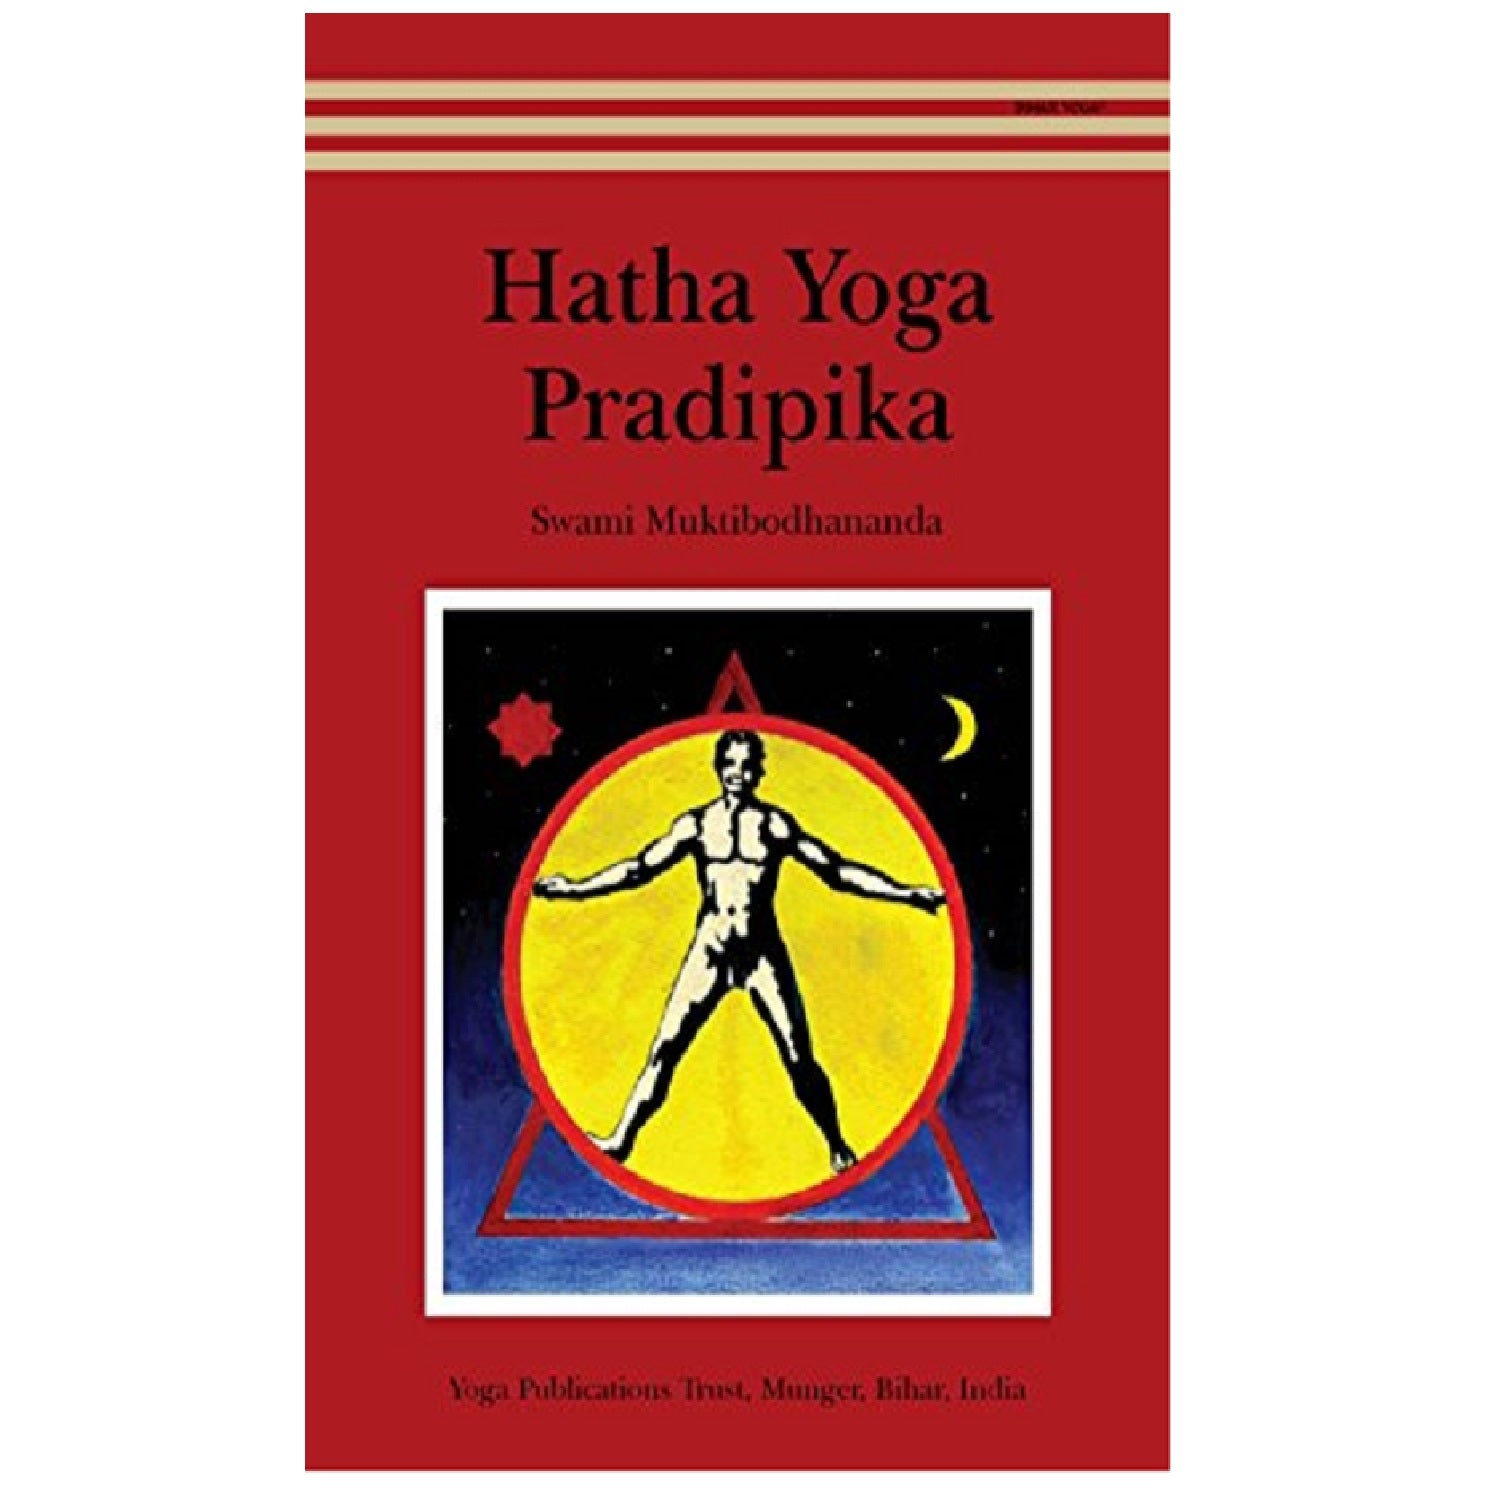 Hatha Yoga Pradipika Light On Hatha Yoga Paperback